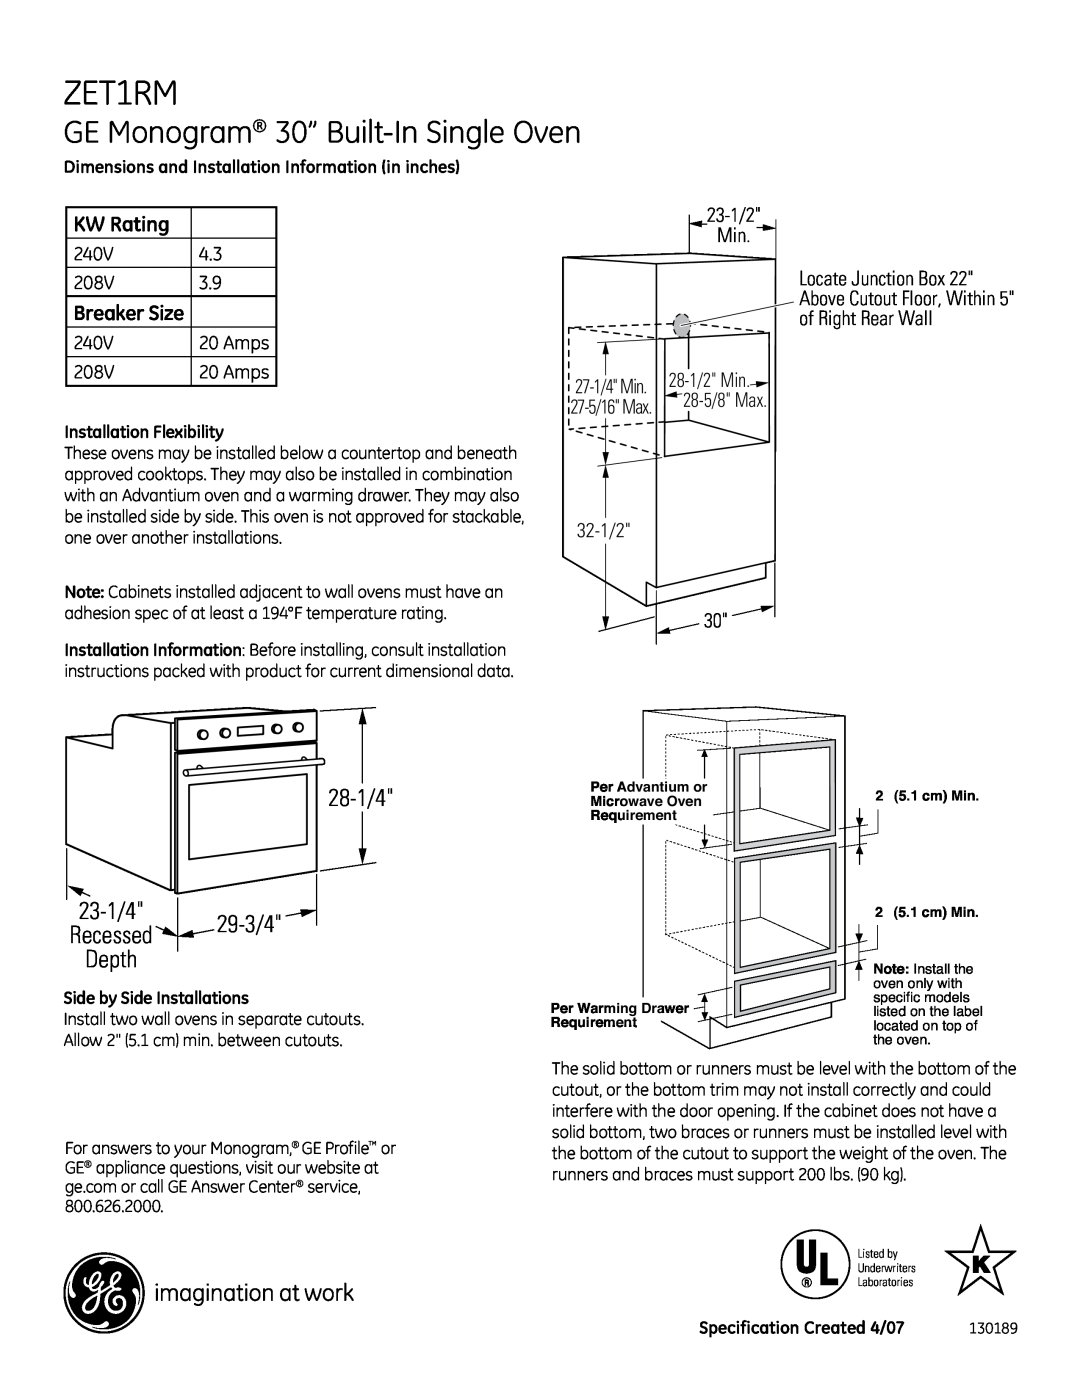 GE Monogram ZET1RM installation instructions GE Monogram 30” Built-In Single Oven, 28-1/4 23-1/4 29-3/4 Recessed Depth 